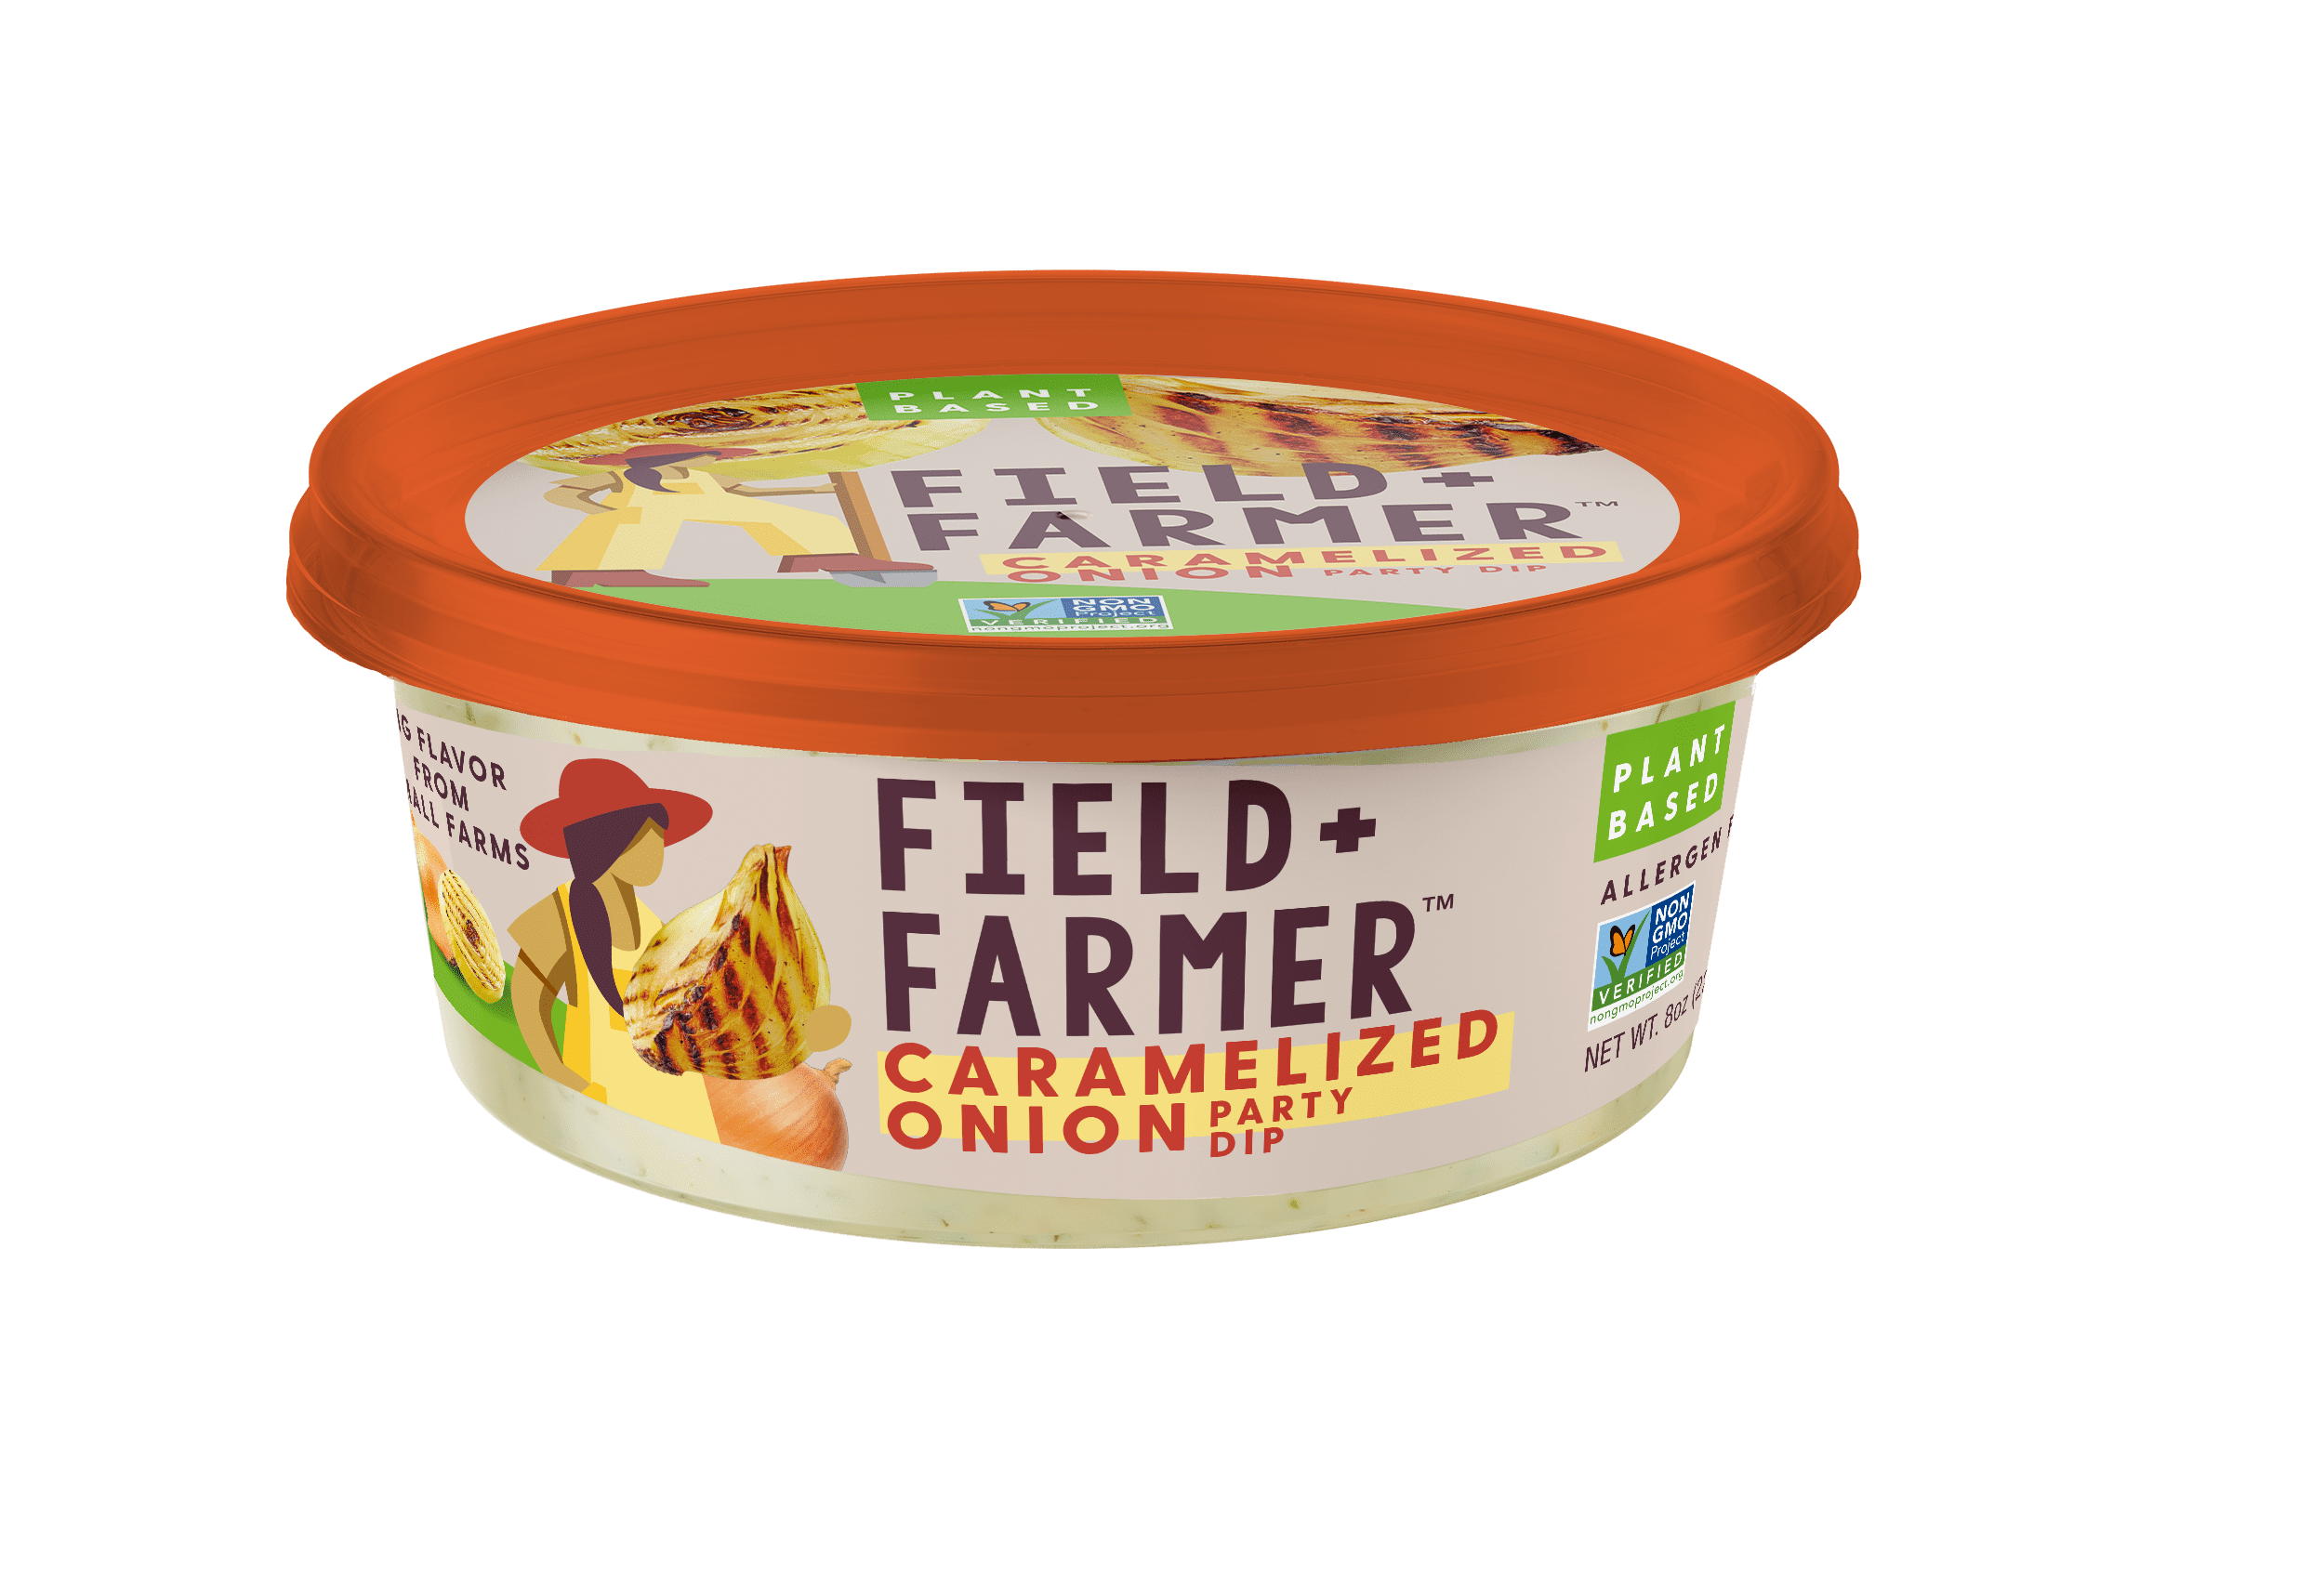 Field + Farmer Caramelized Onion Party Dip 8 oz - Walmart.com